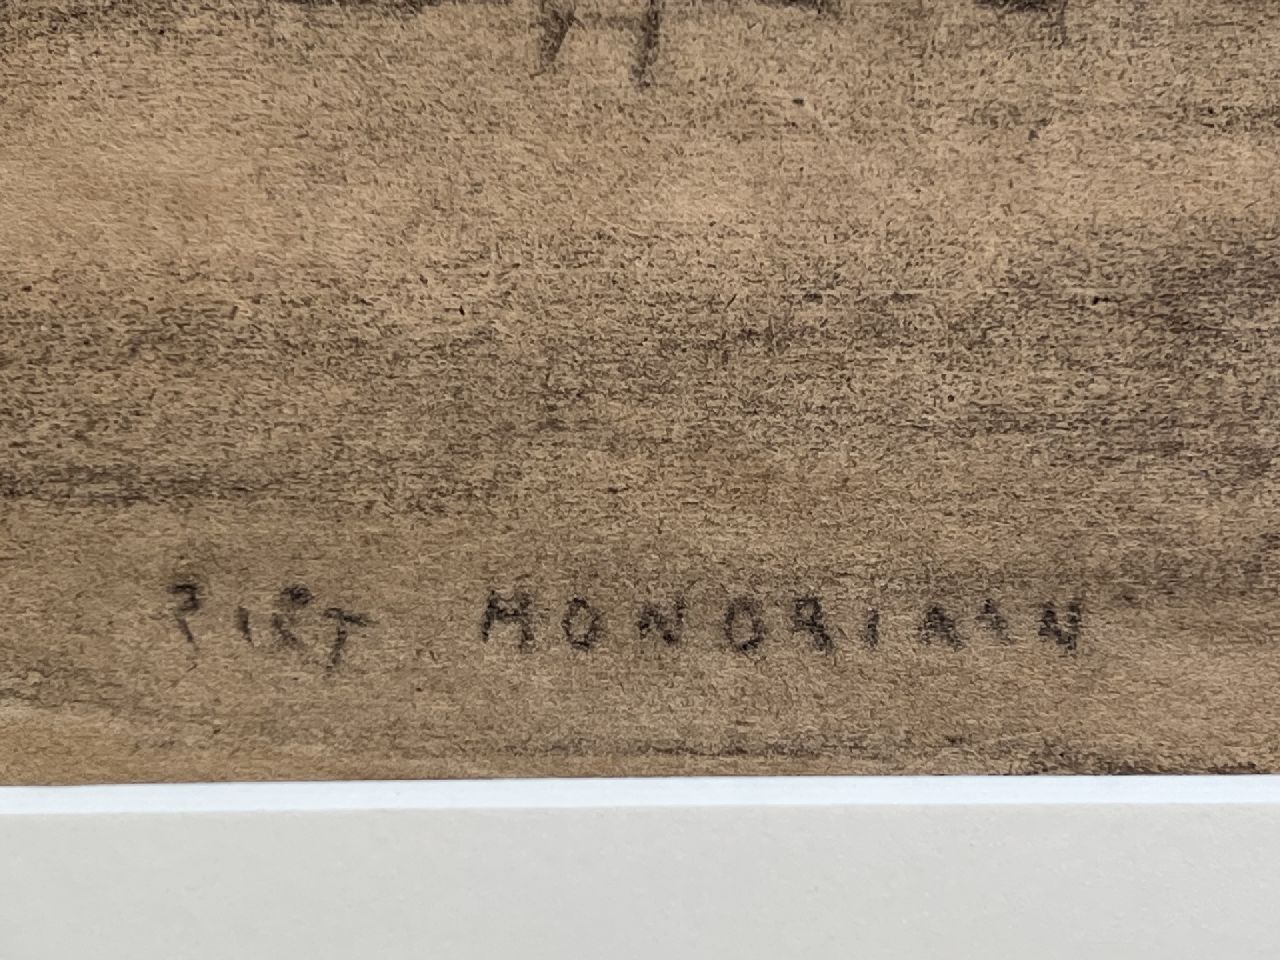 Piet Mondriaan signatures Group of trees